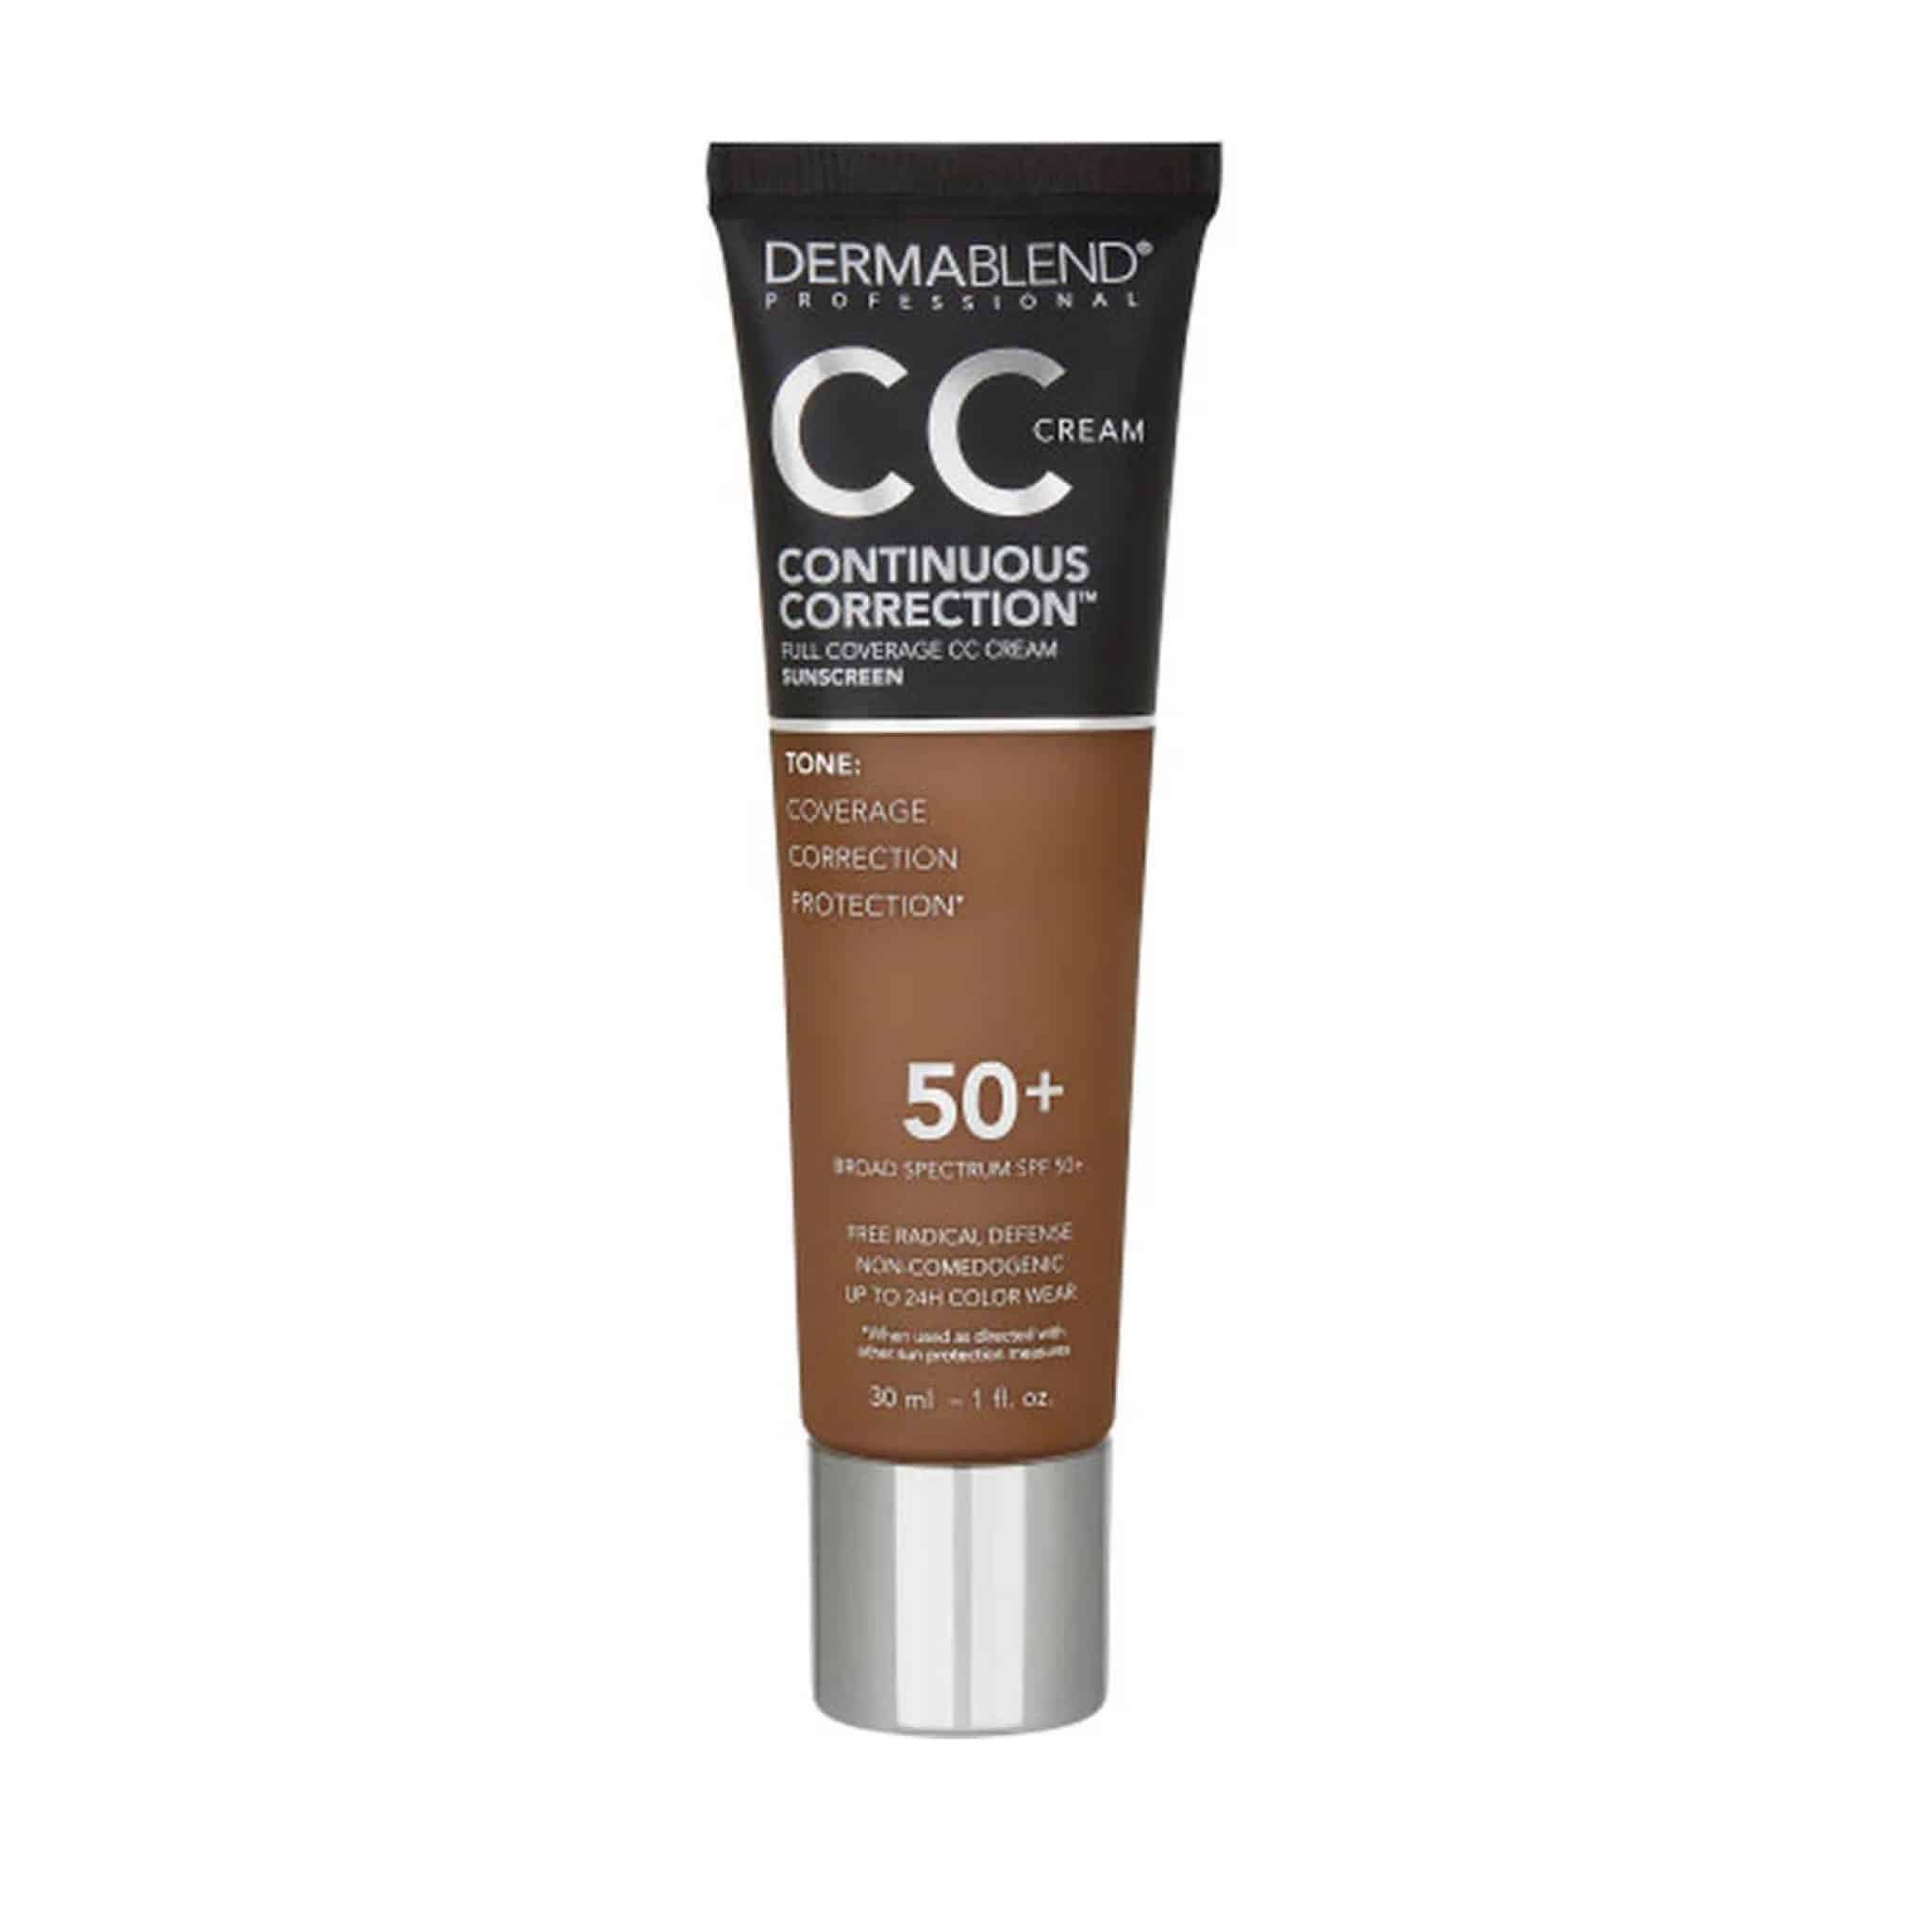 CC+ Cream with SPF 50+ - IT Cosmetics